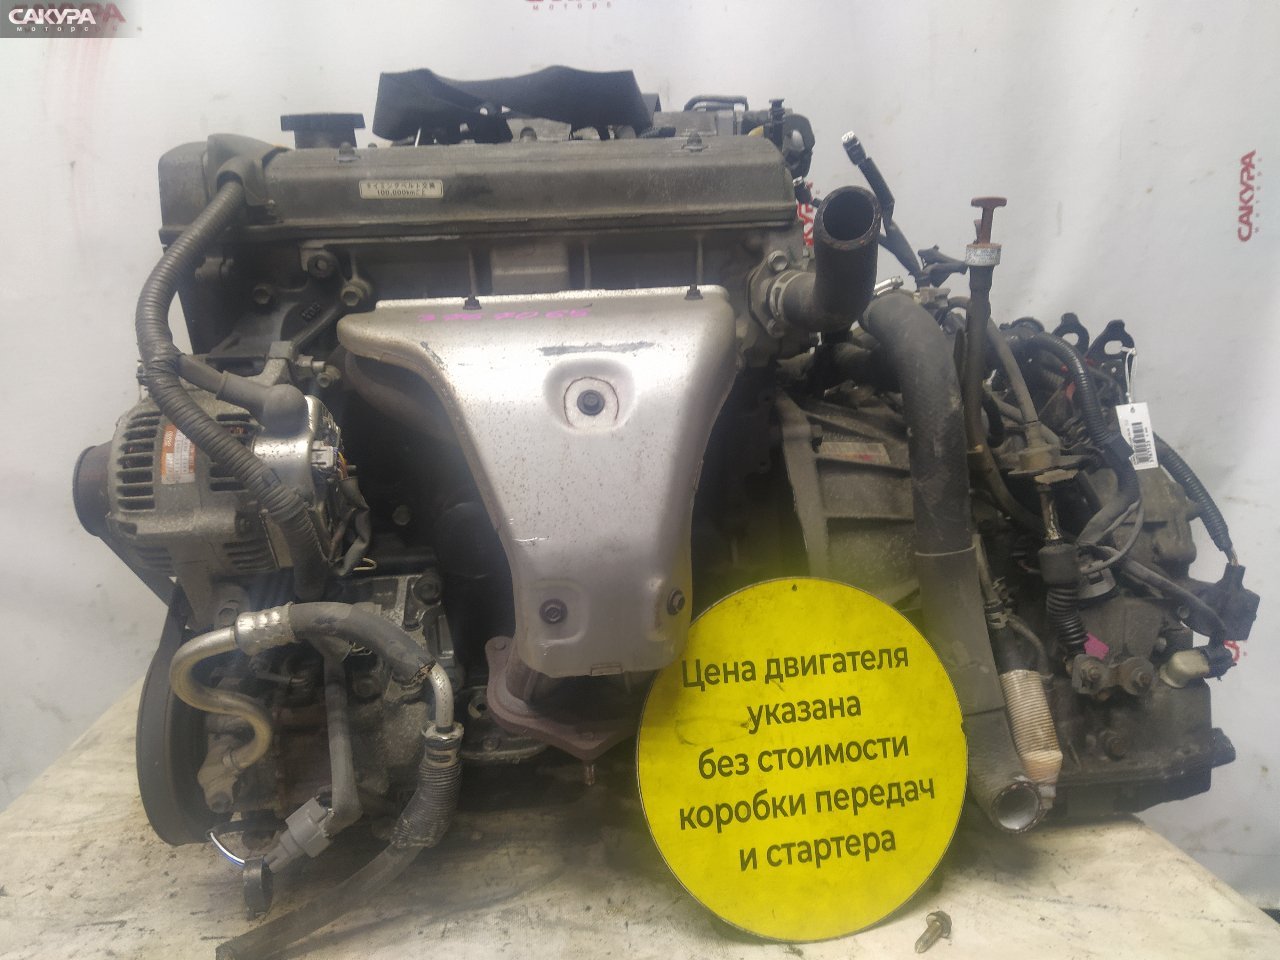 Двигатель Toyota Corolla Spacio AE115N 7A-FE: купить в Сакура Красноярск.